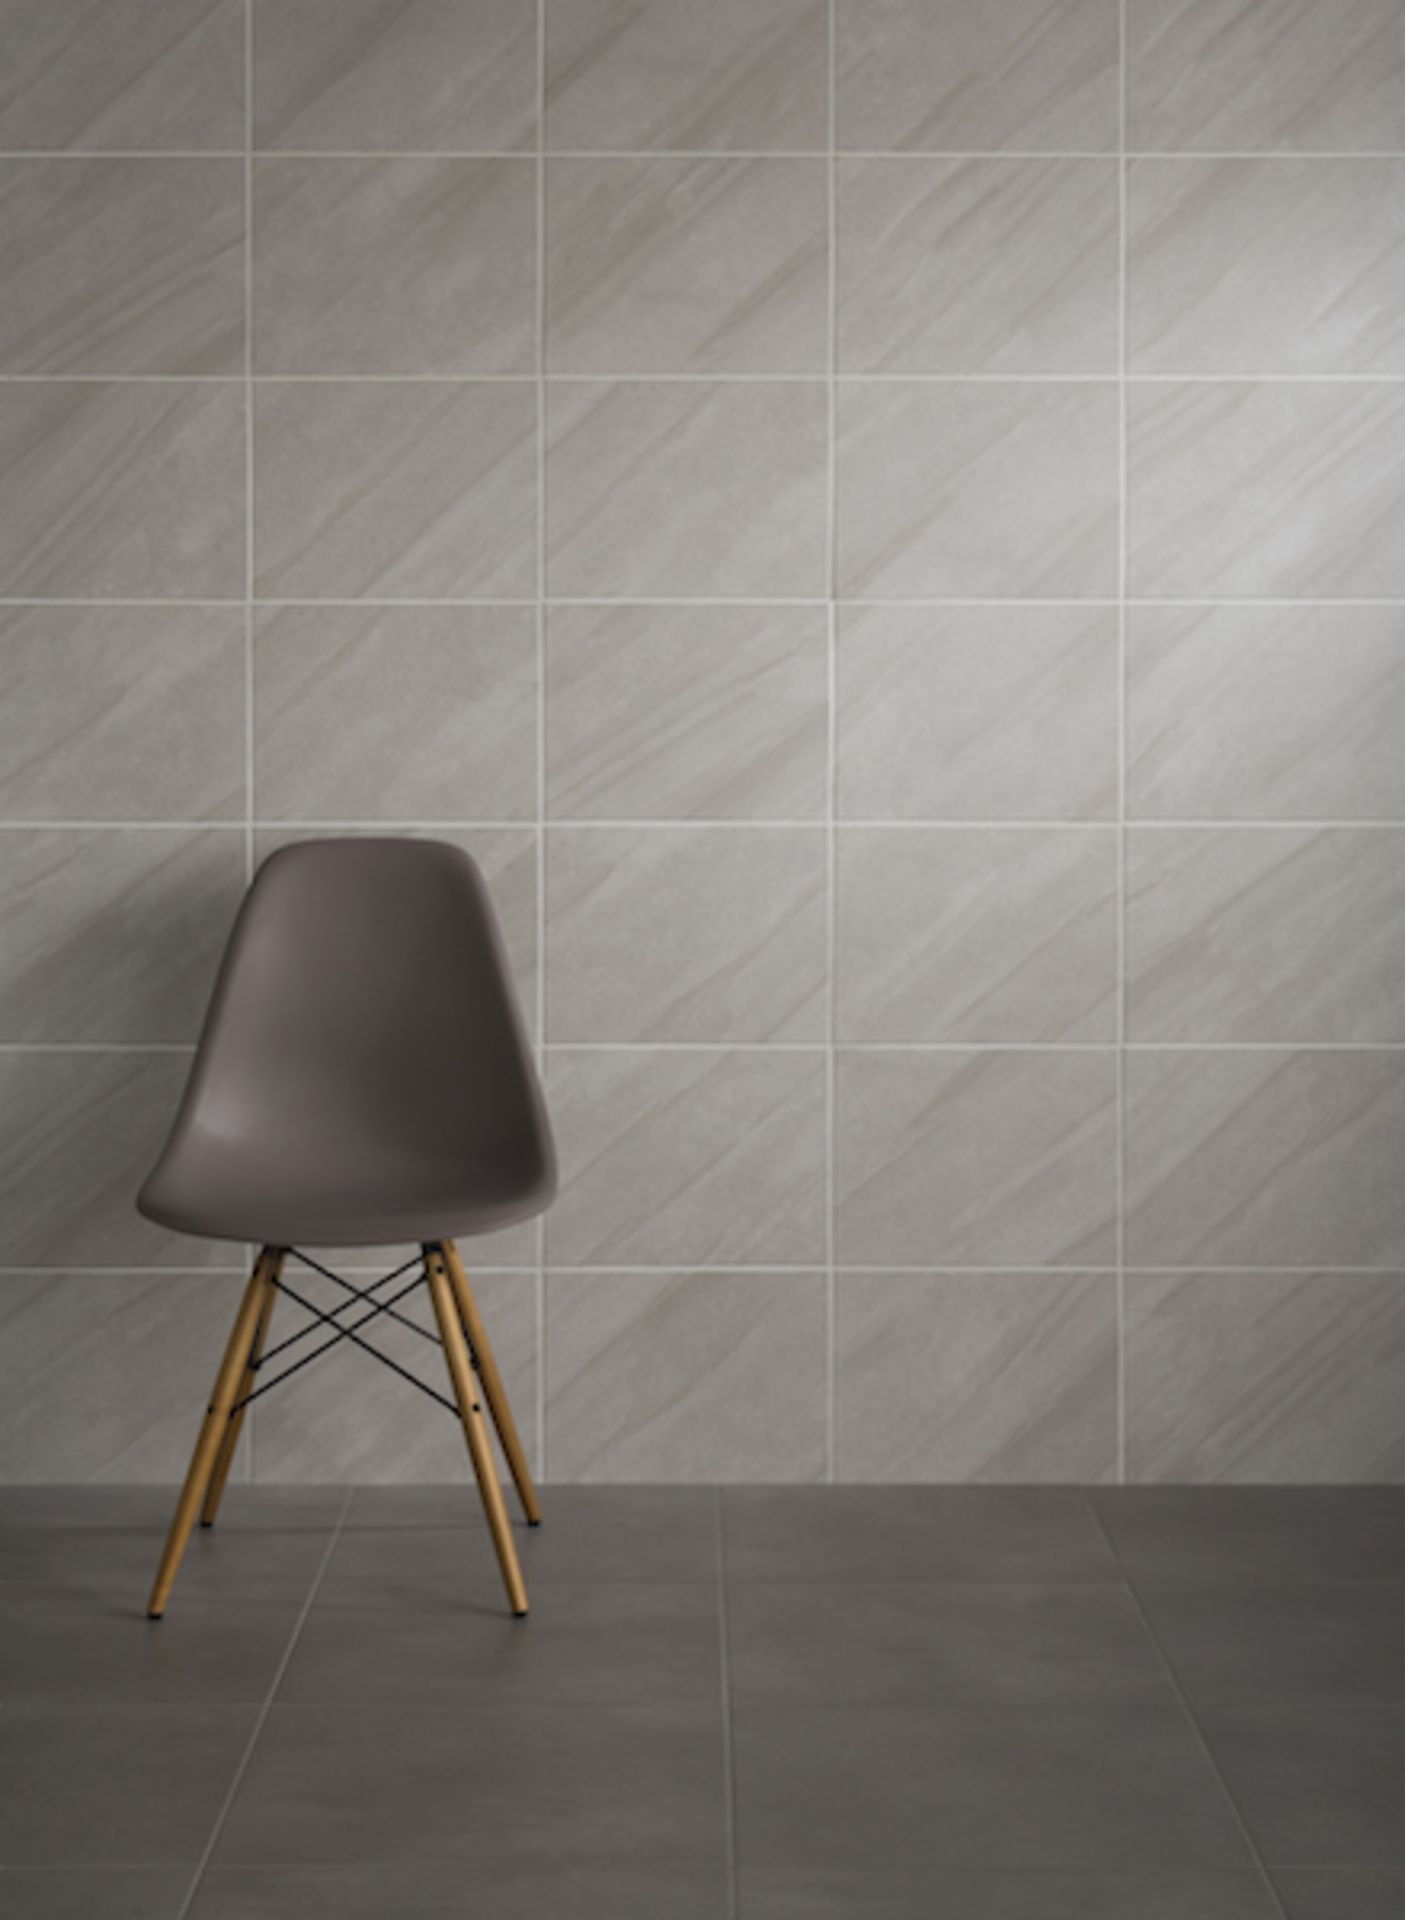 A pallet of 48x packs of 10 Johnsons Tiles 360x275mm Grassmere slate grey matt wall and floor tiles, - Image 2 of 3